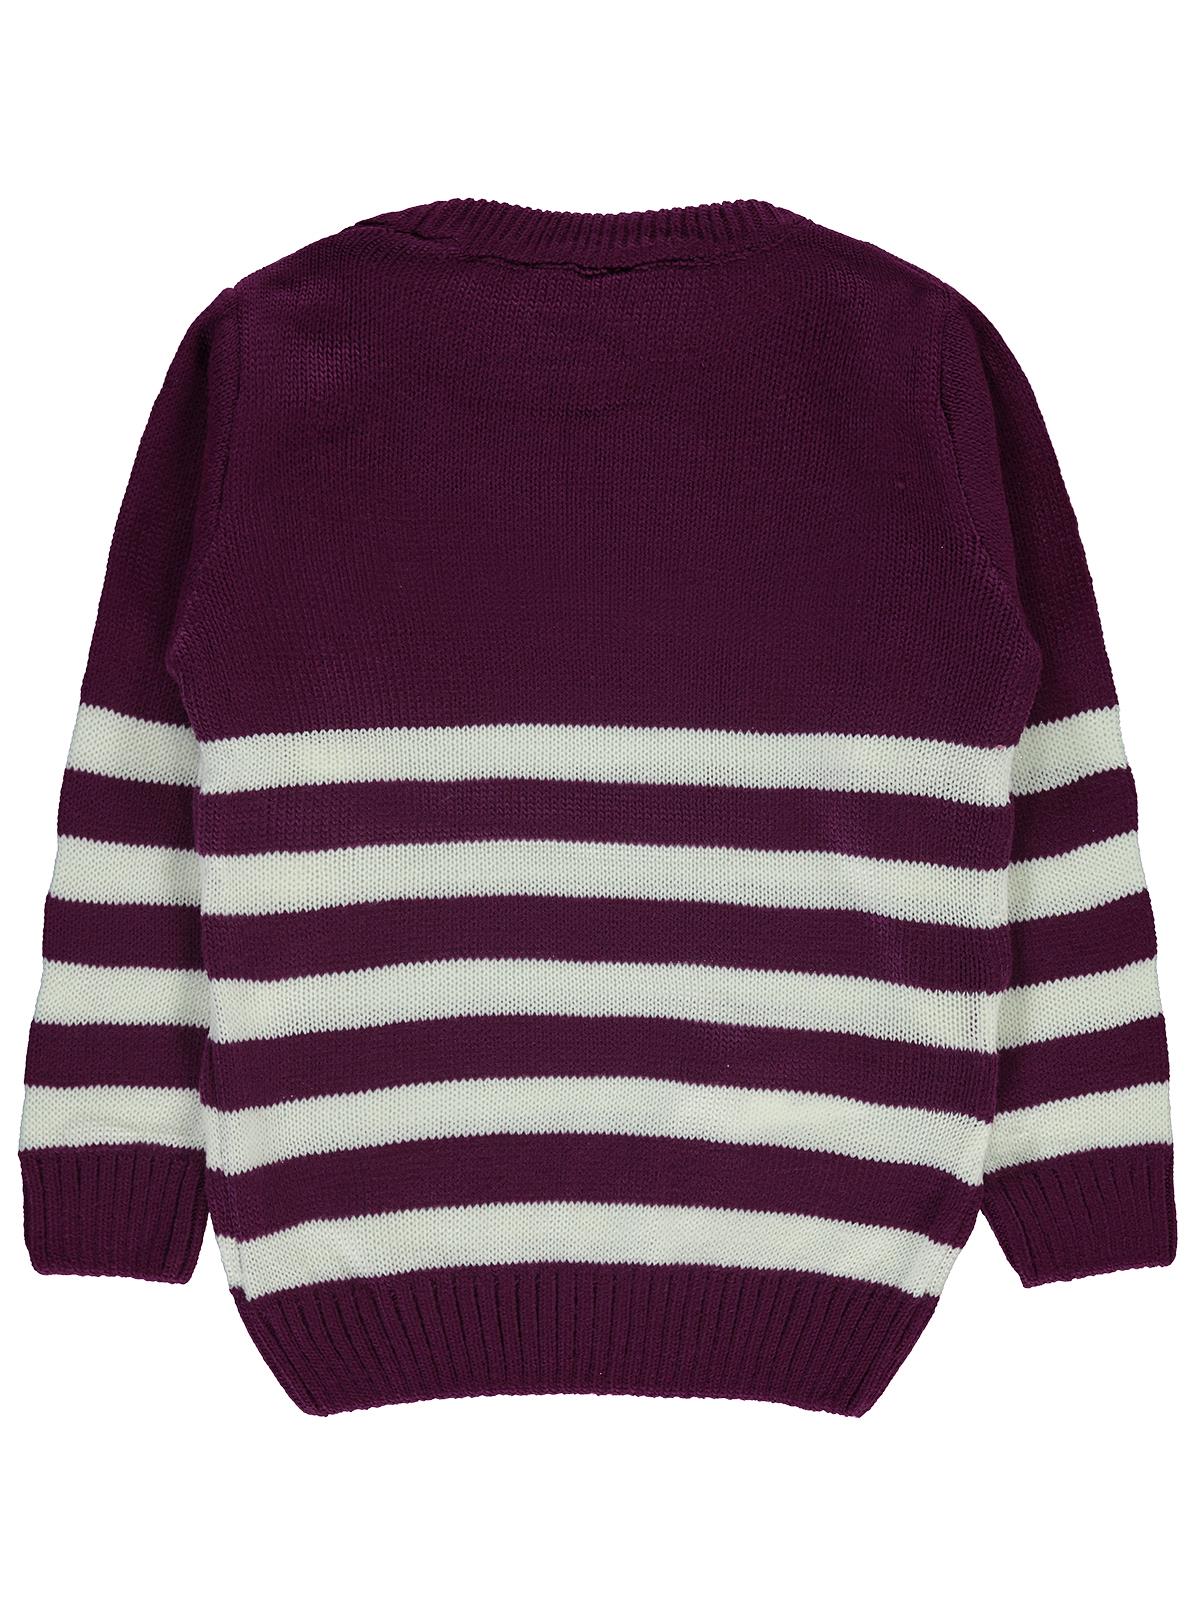 Civil Girls Sweater #9284 (W-21)